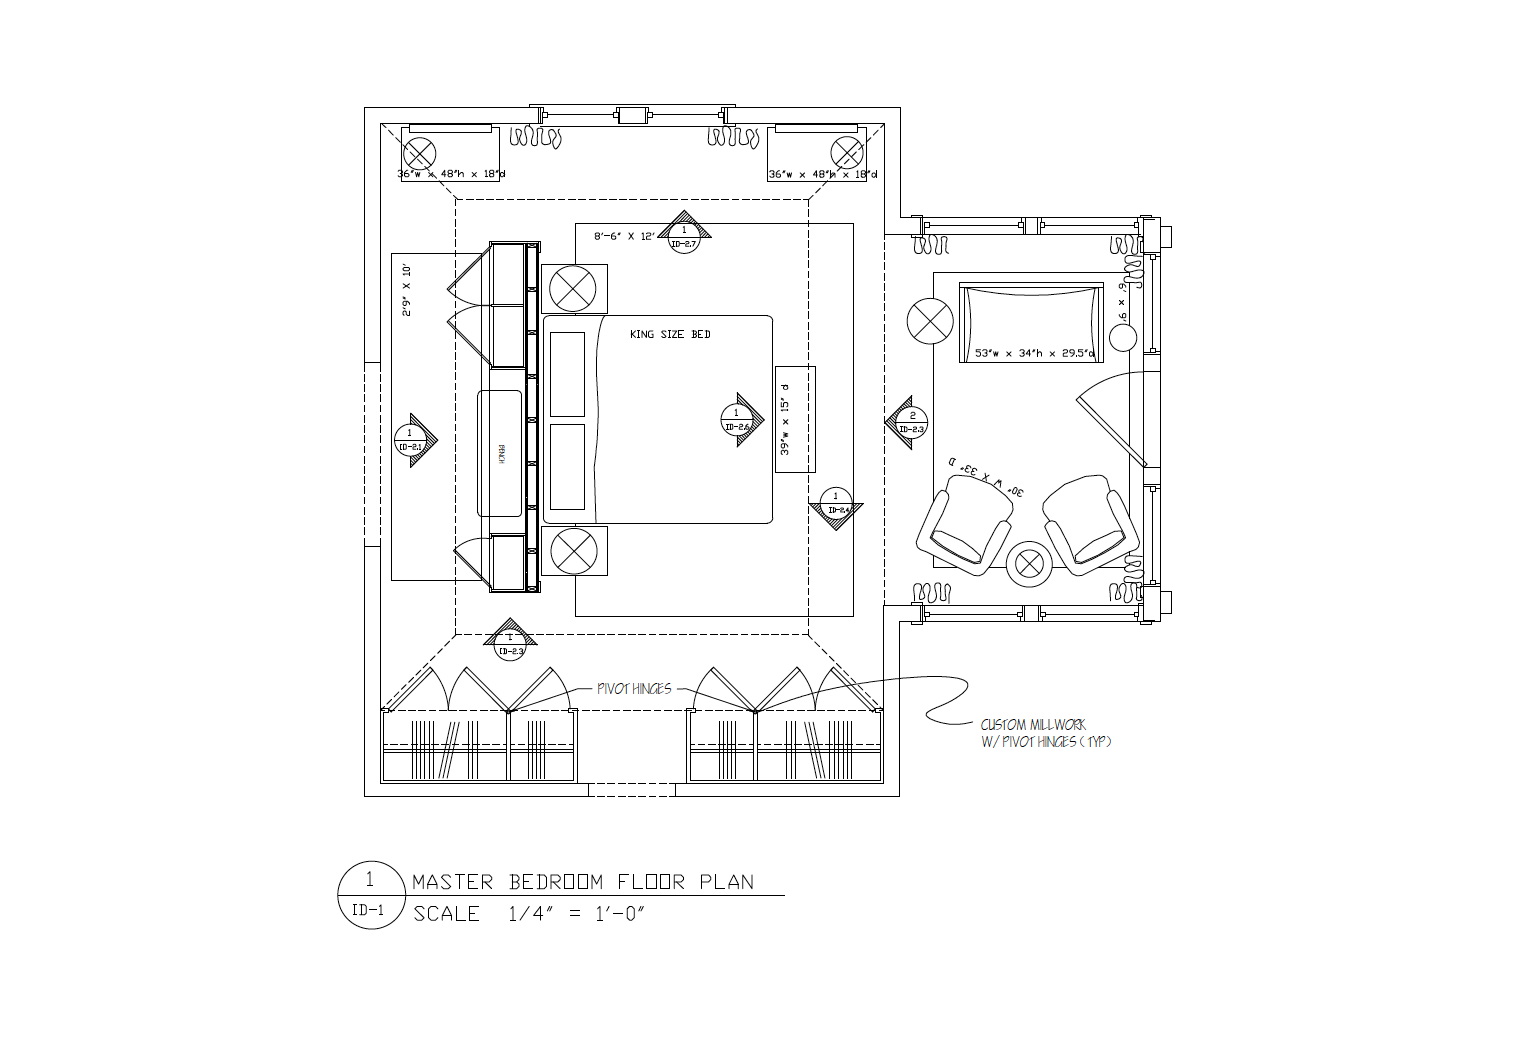 Master Bedroom Floorplan